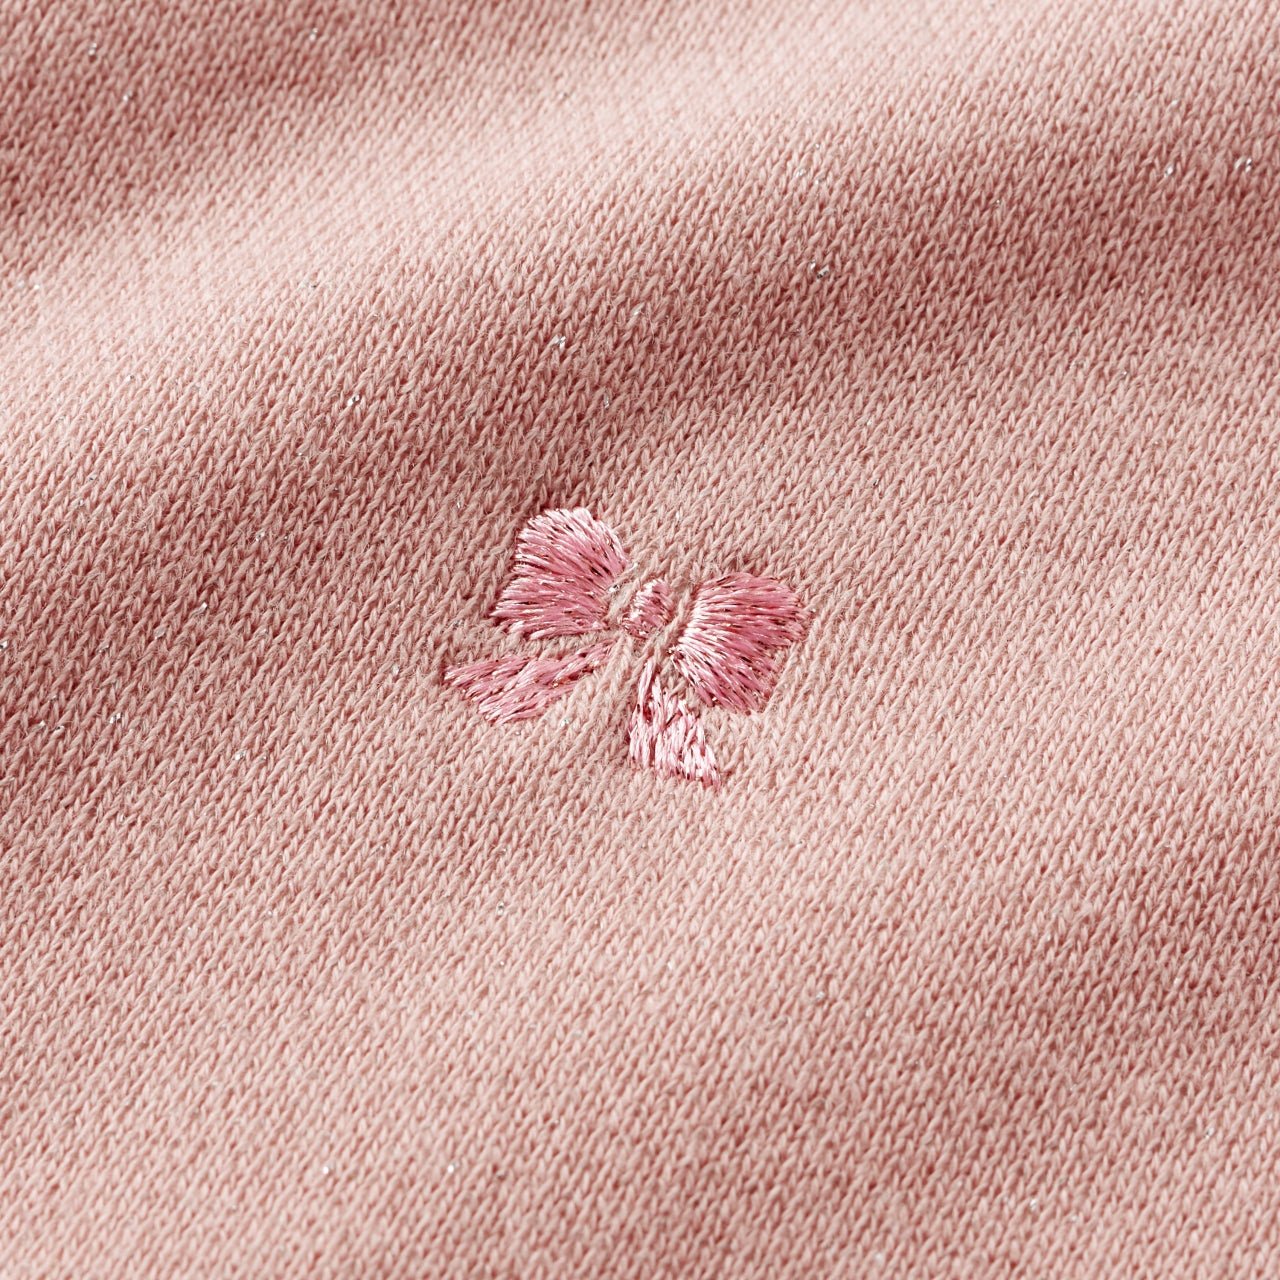 Shimmery Ribbon Sweatshirt - 13-5611-573-08-90